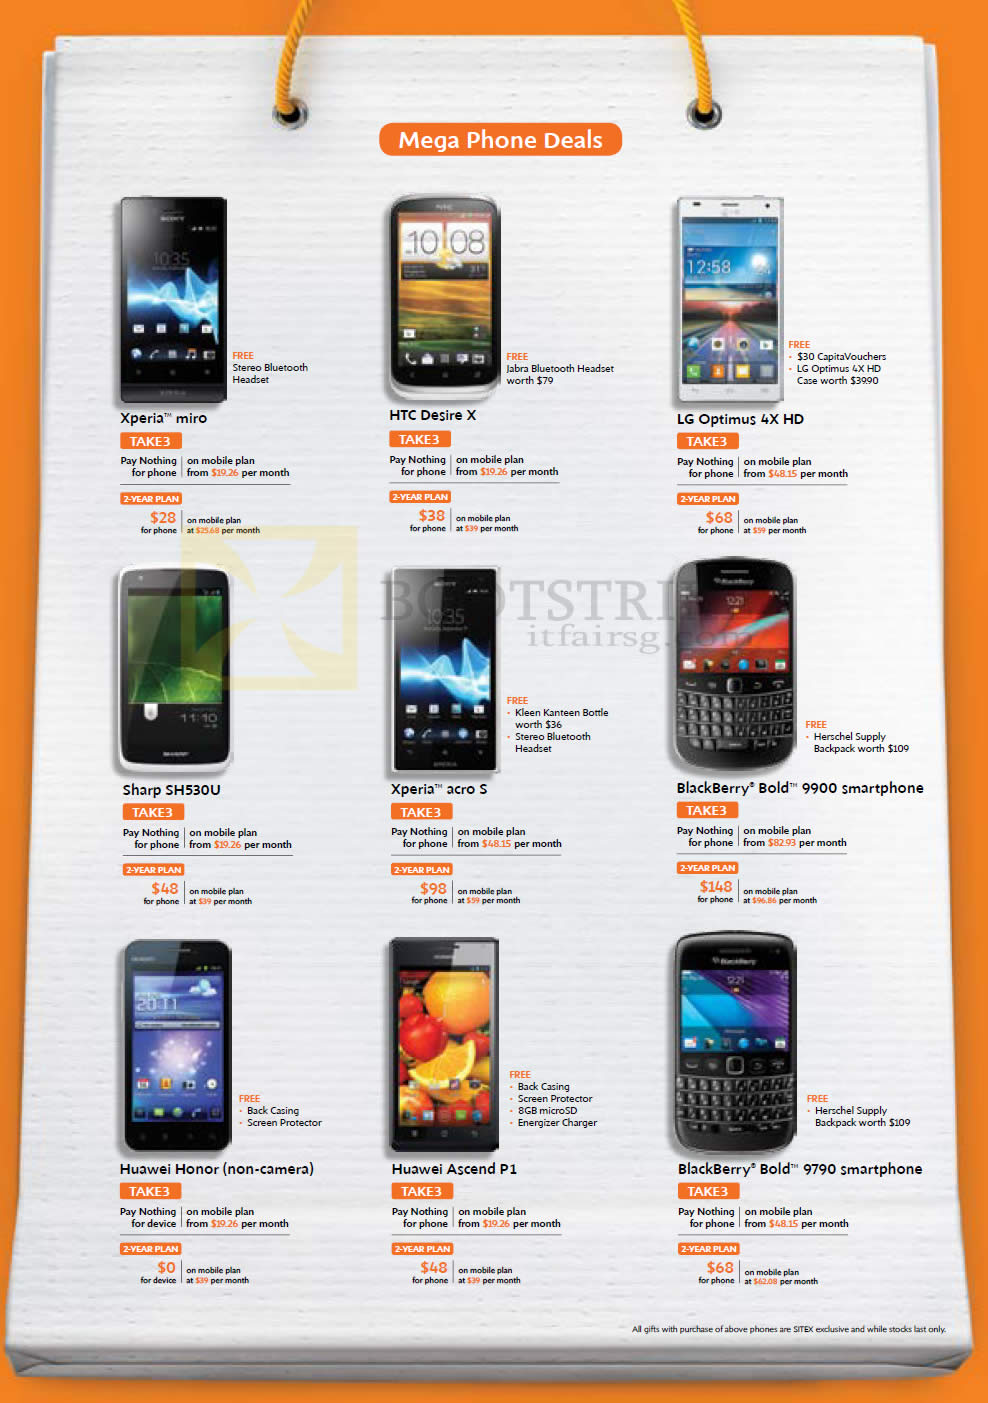 SITEX 2012 price list image brochure of M1 Mobile Phones Sony Xperia Miro, Acro S, HTC Desire X, LG Optimus 4X HD, Sharp SH530U, Blackberry Bold 9900 9790, Huawei Honor Ascend P1